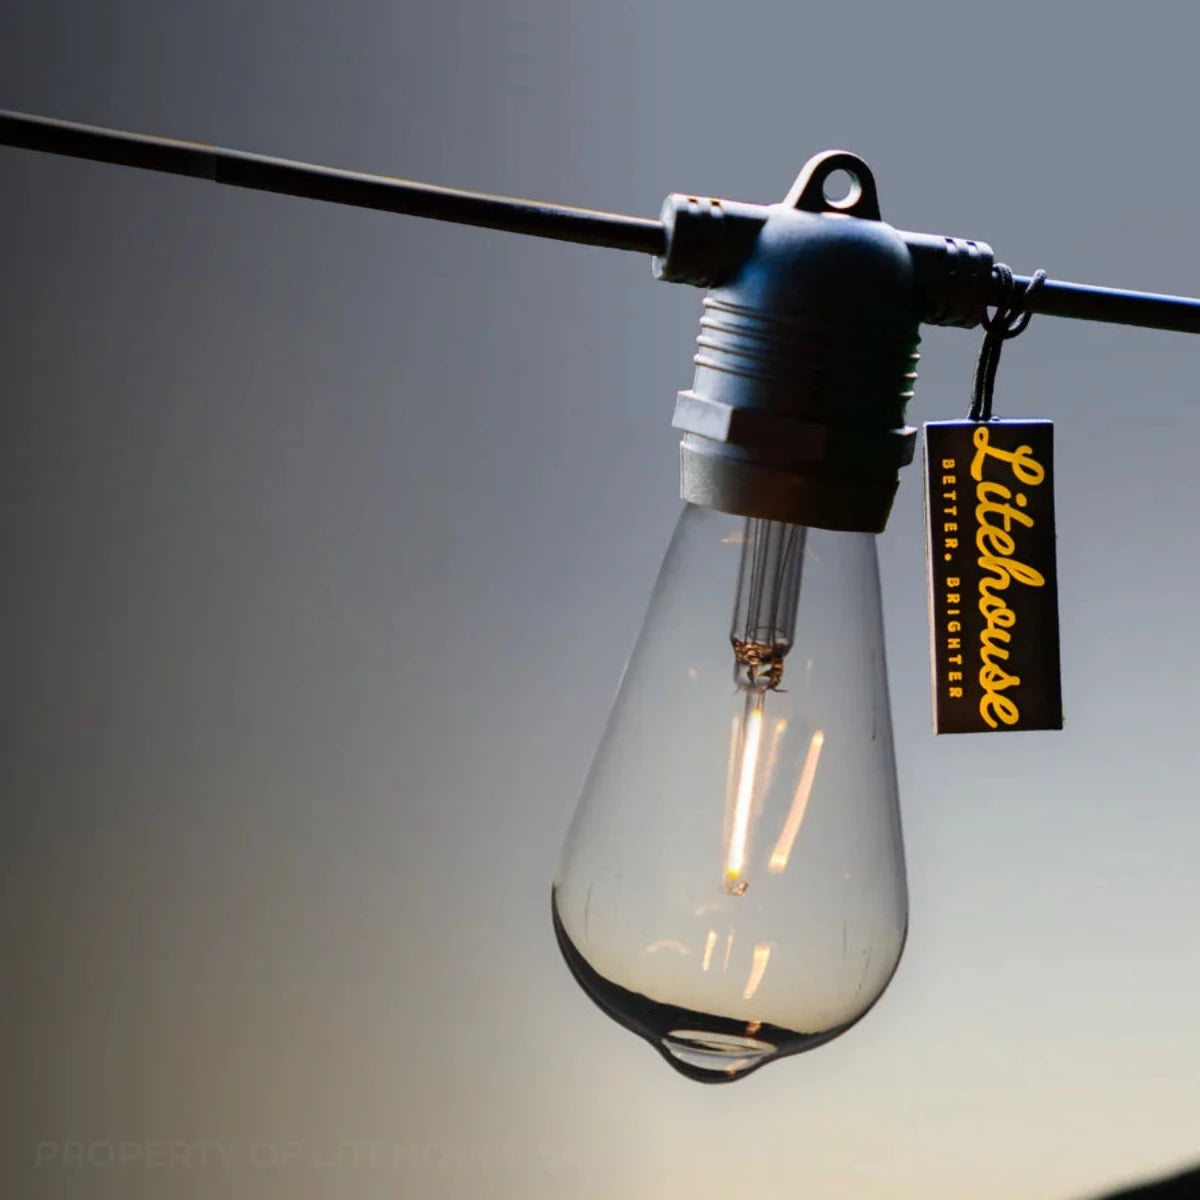 Litehouse Solar LED Festoon Outdoor Vintage Bulb String Lights